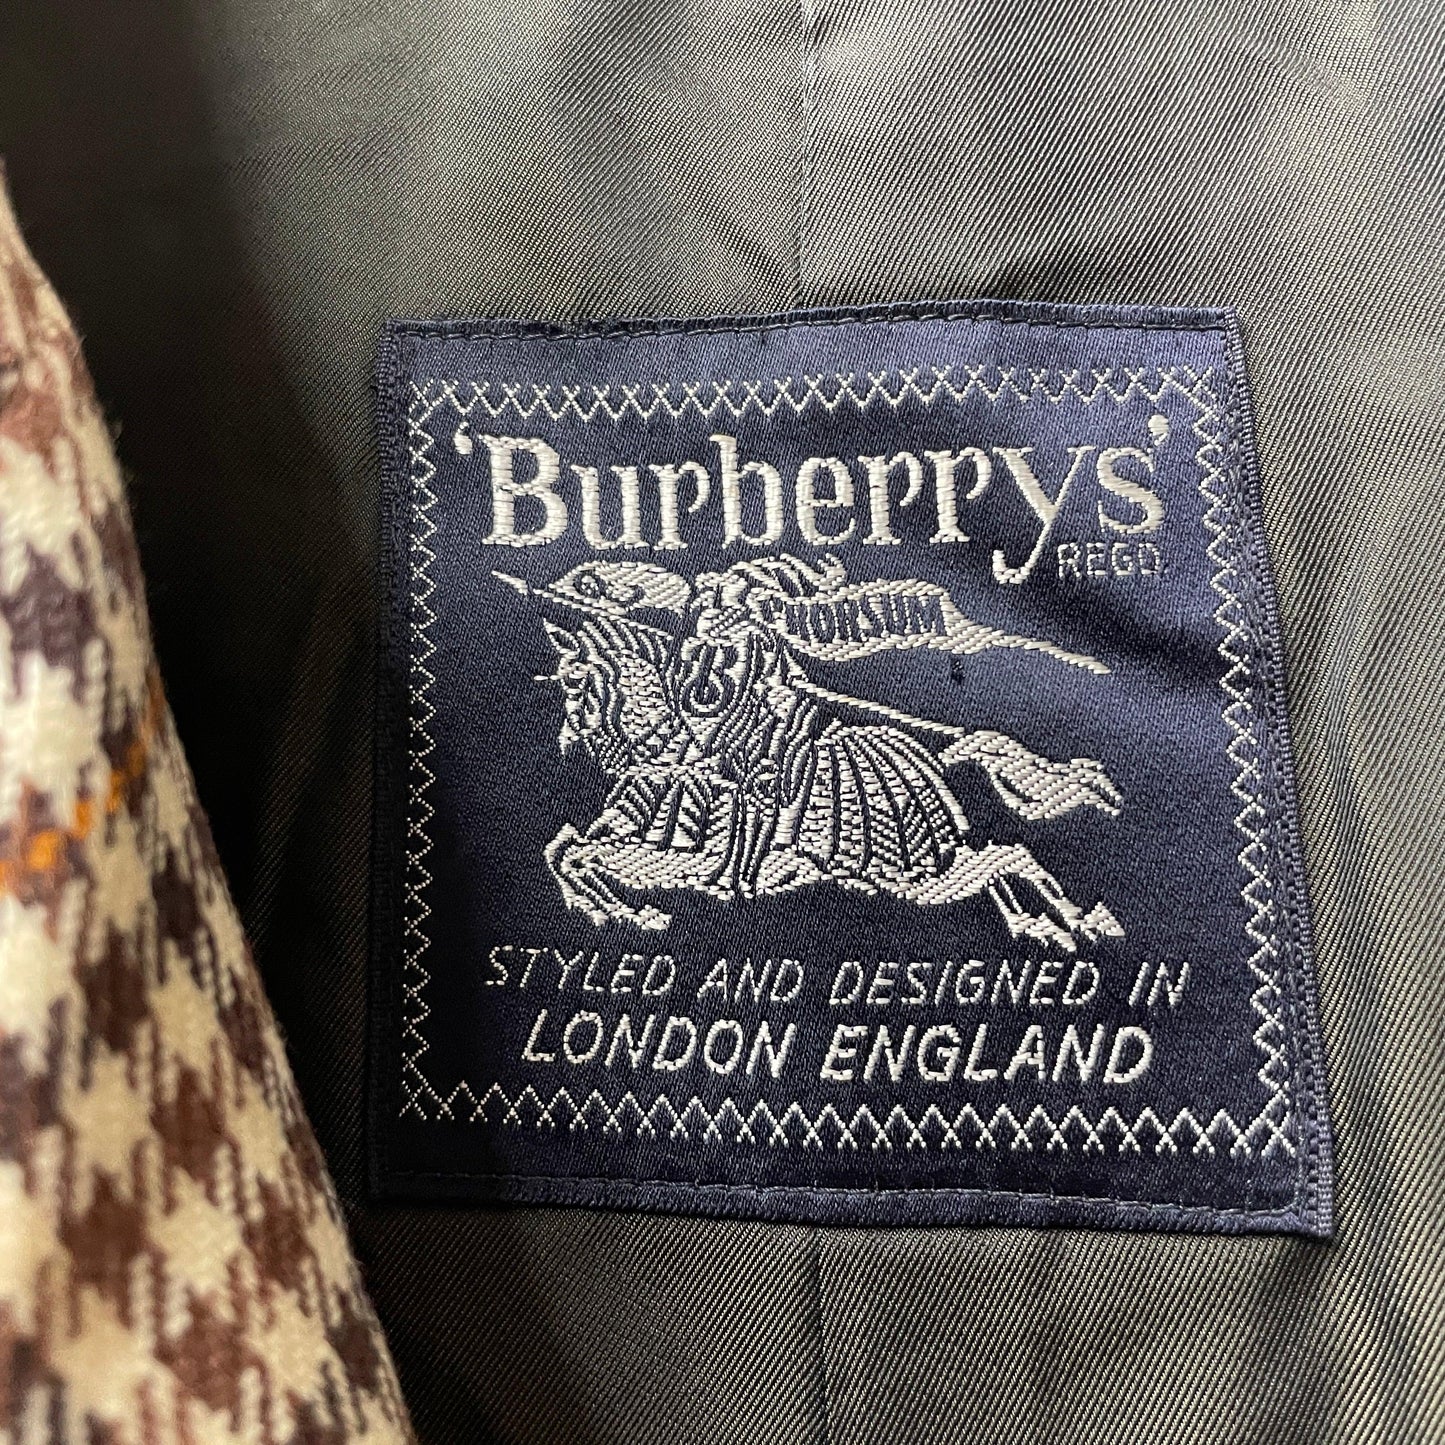 burberrys coat burberry coat burberry